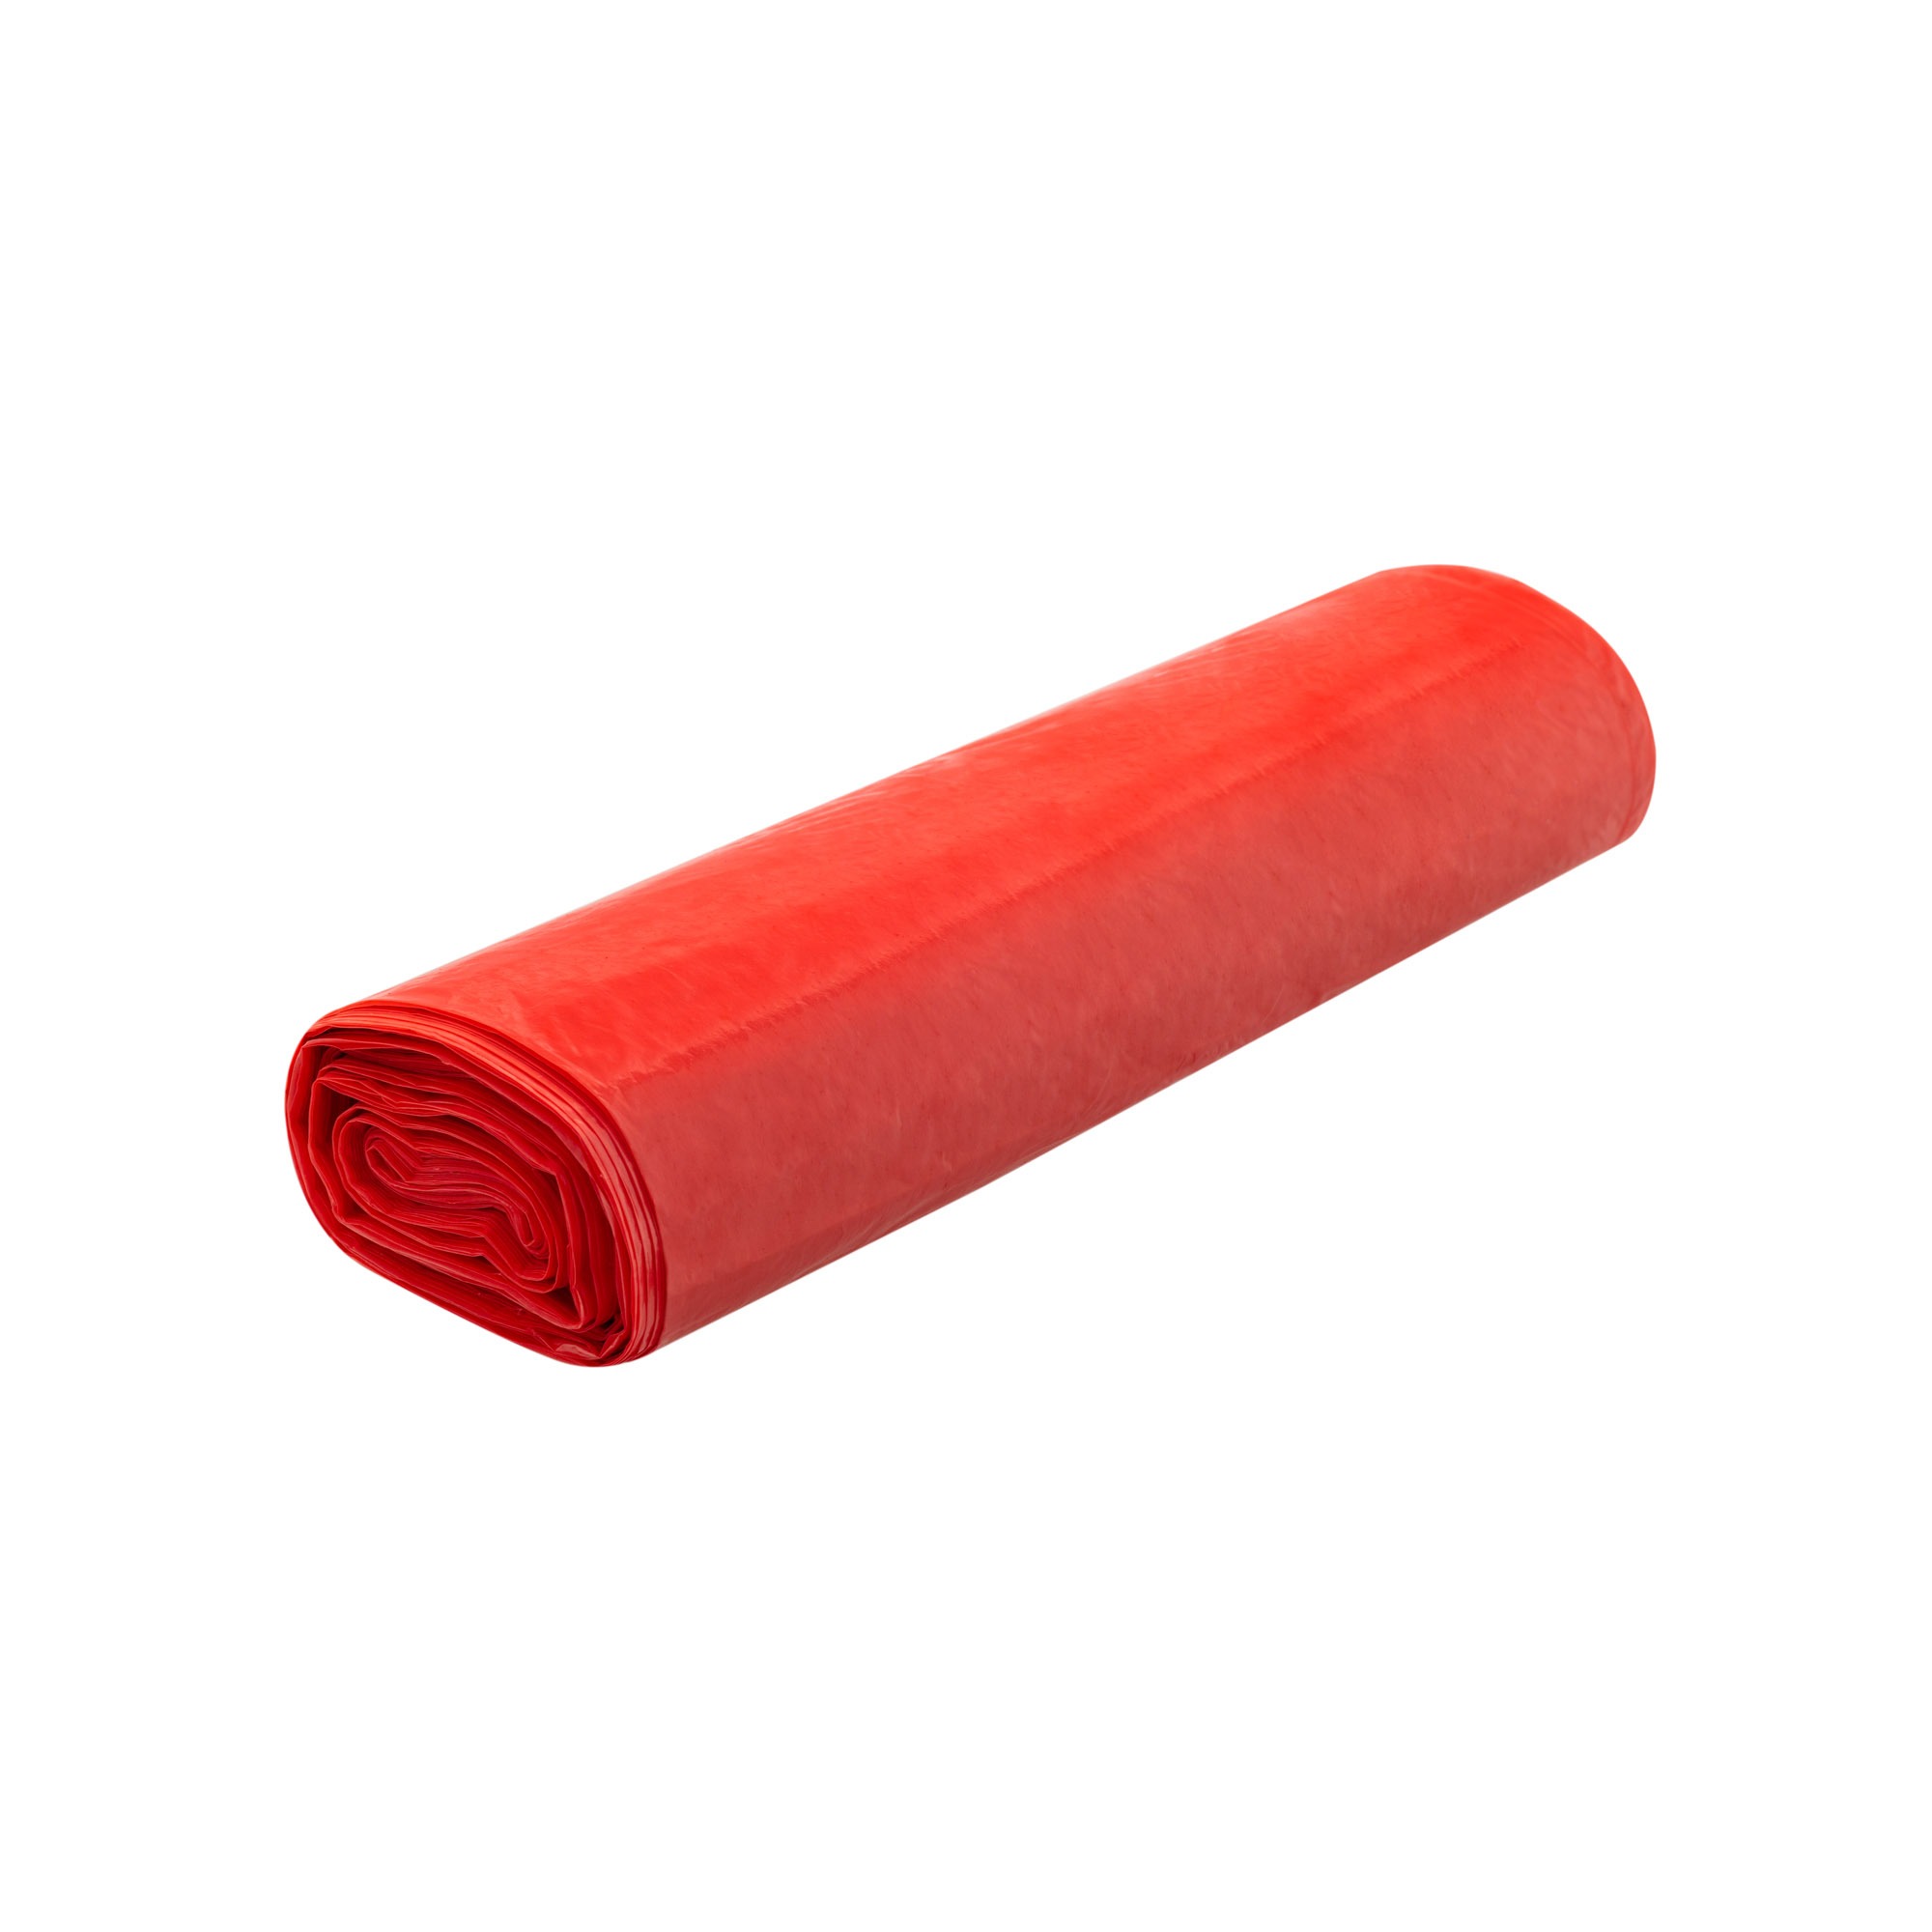 Worki sanitarne LDPE czerwone 70×110 120 litrów 25 sztuk